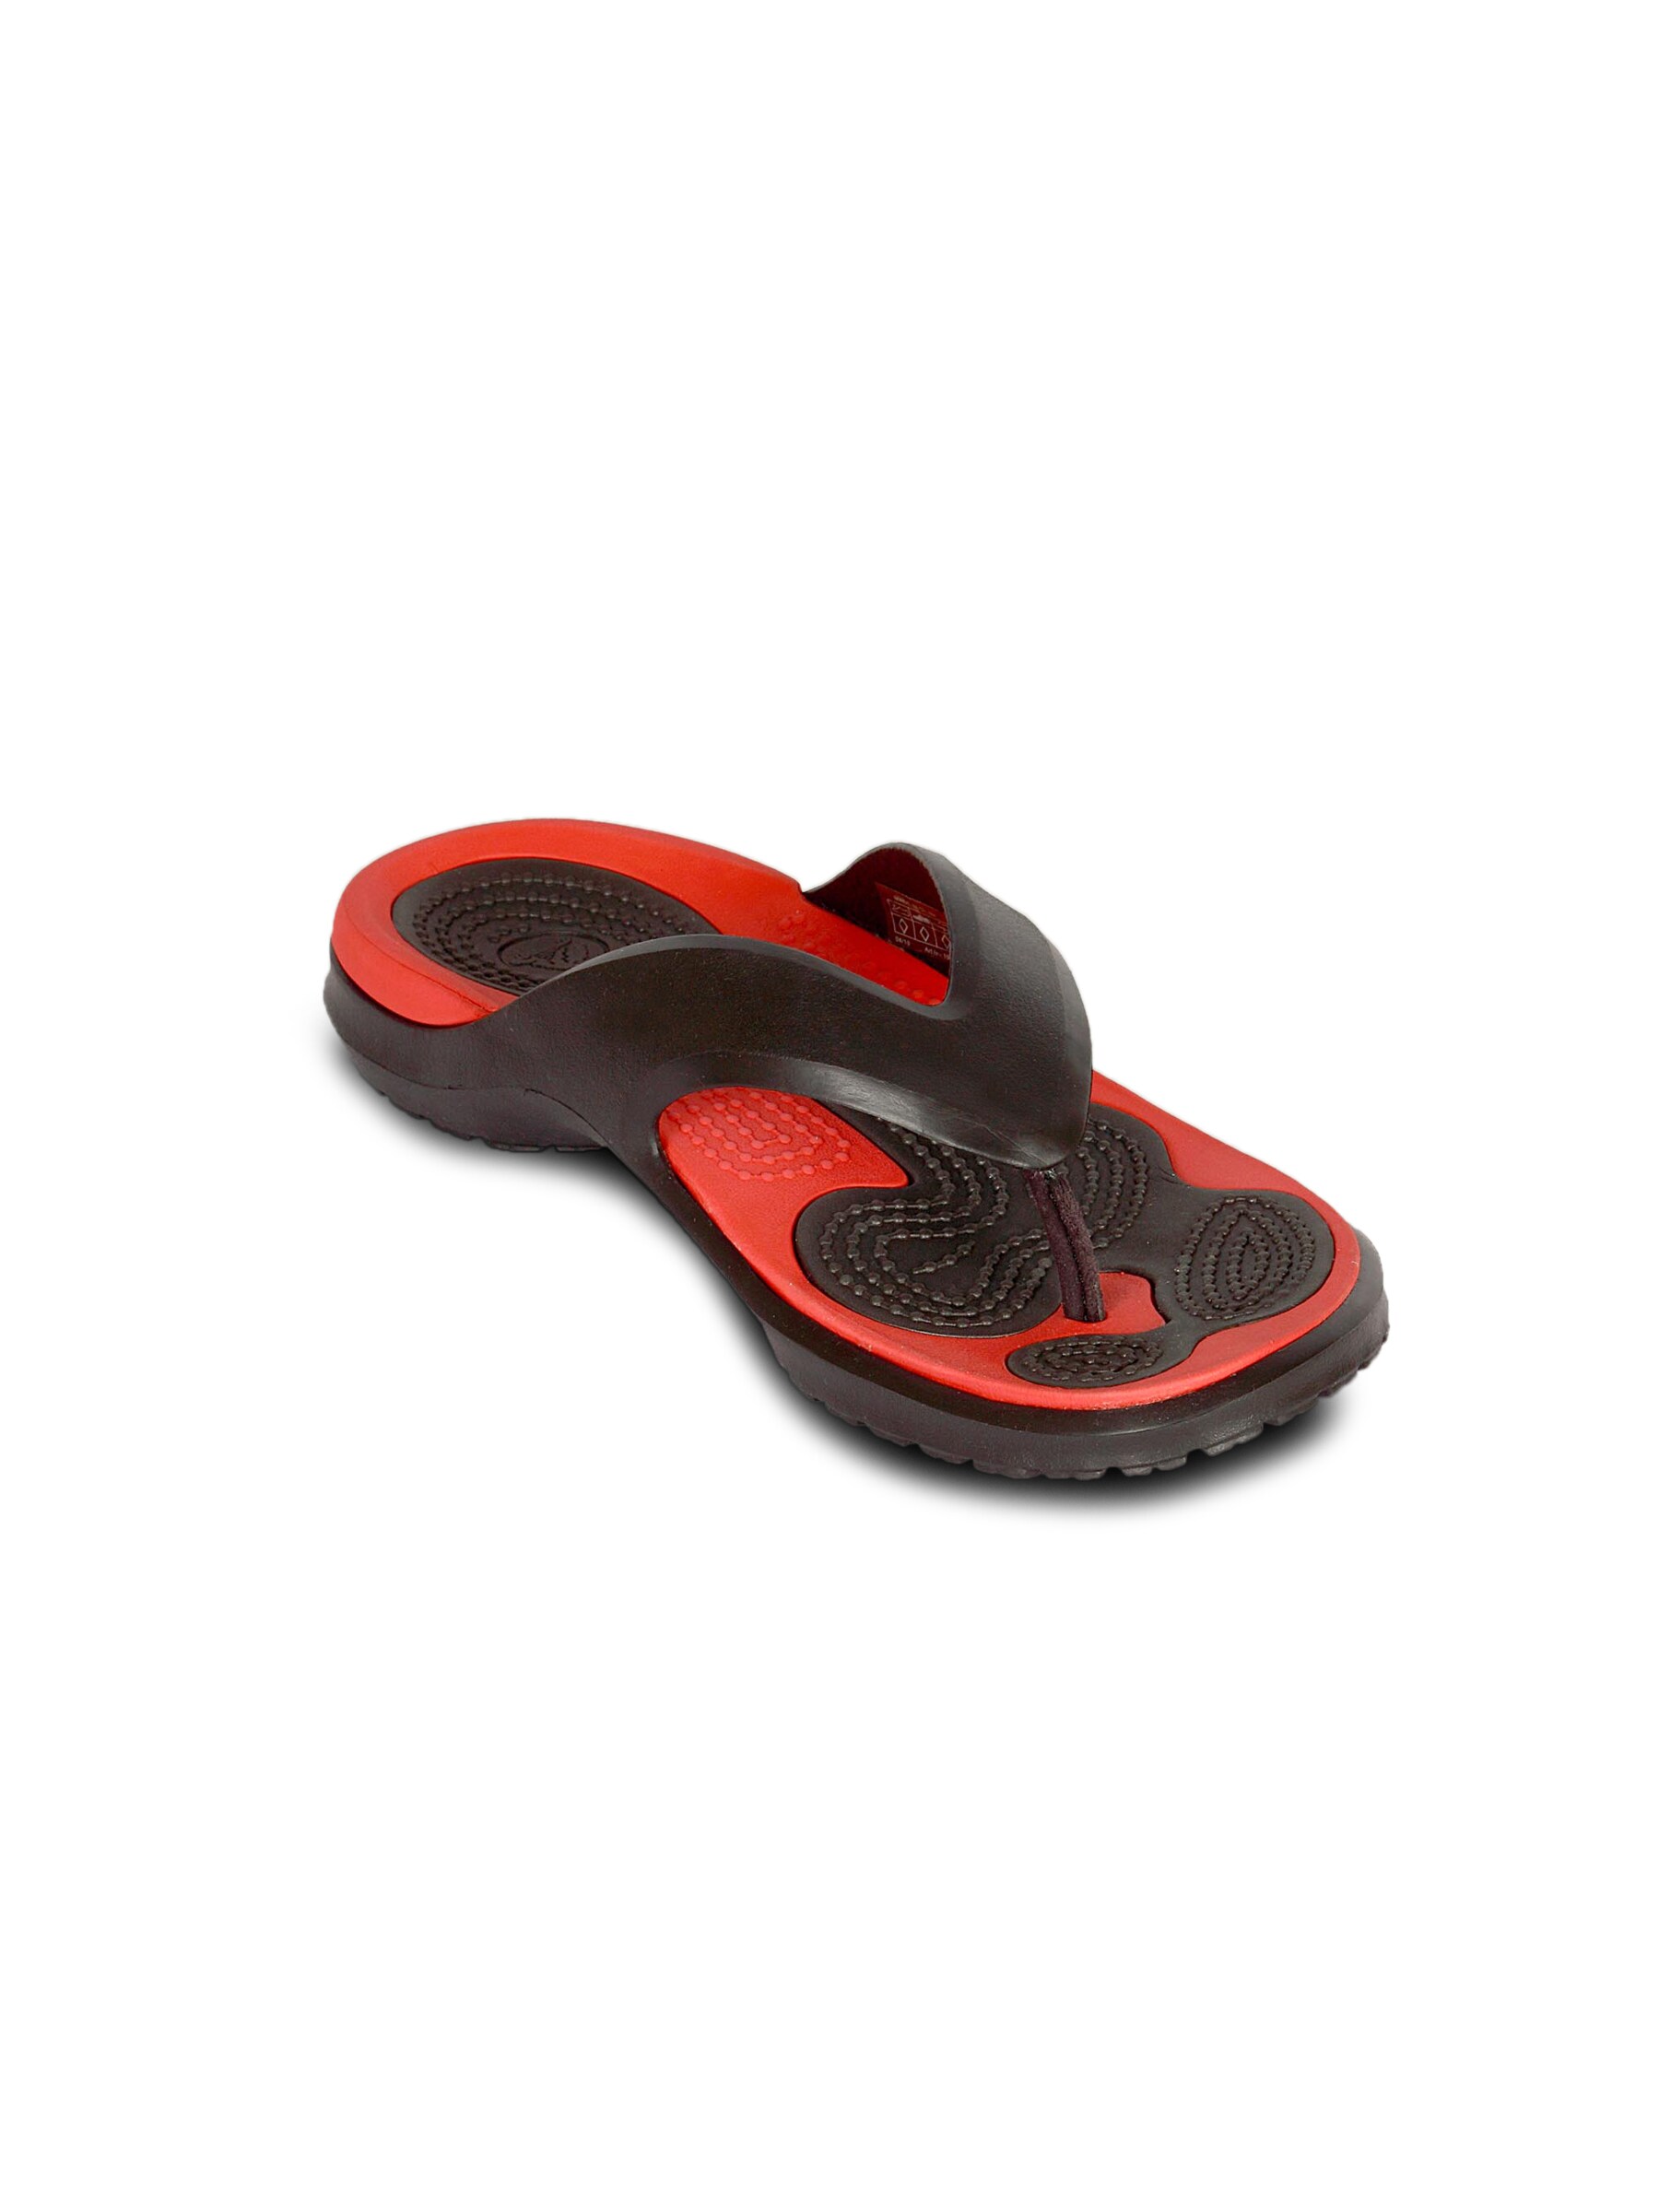 Crocs Unisex Modi Flip Black Red Flip Flop